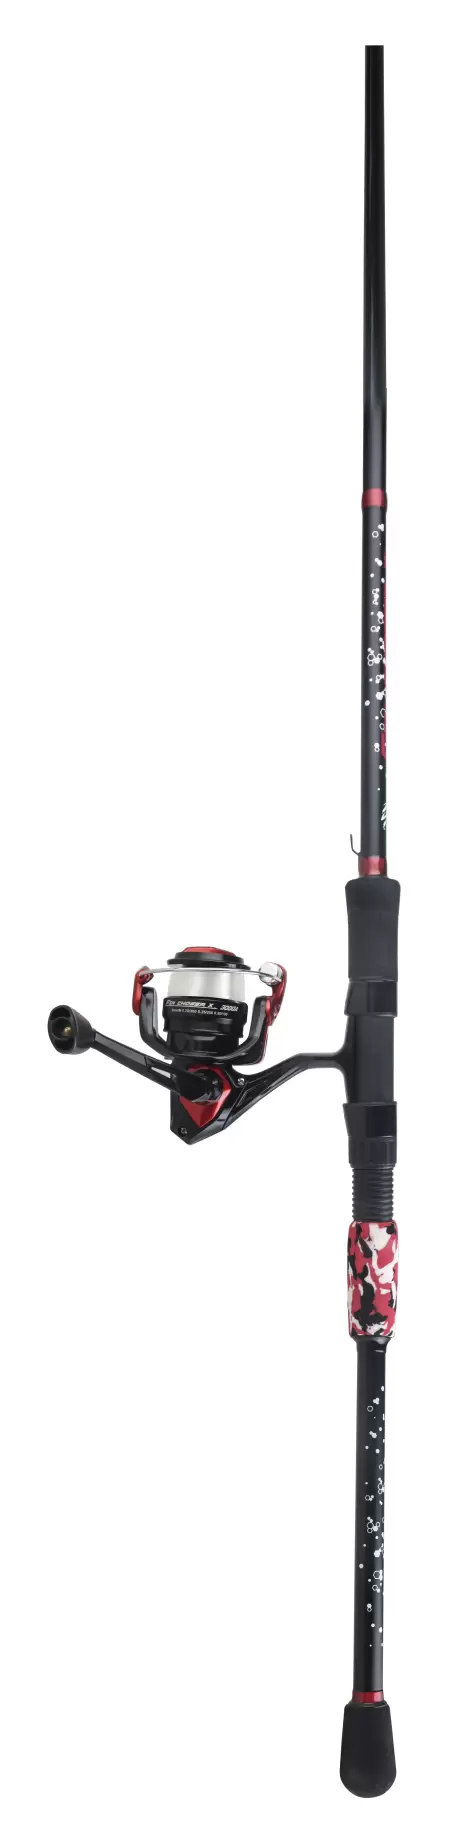 Fin Chaser X Series Combos (NEW)  OKUMA Fishing Rods and Reels - OKUMA  FISHING TACKLE CO., LTD.